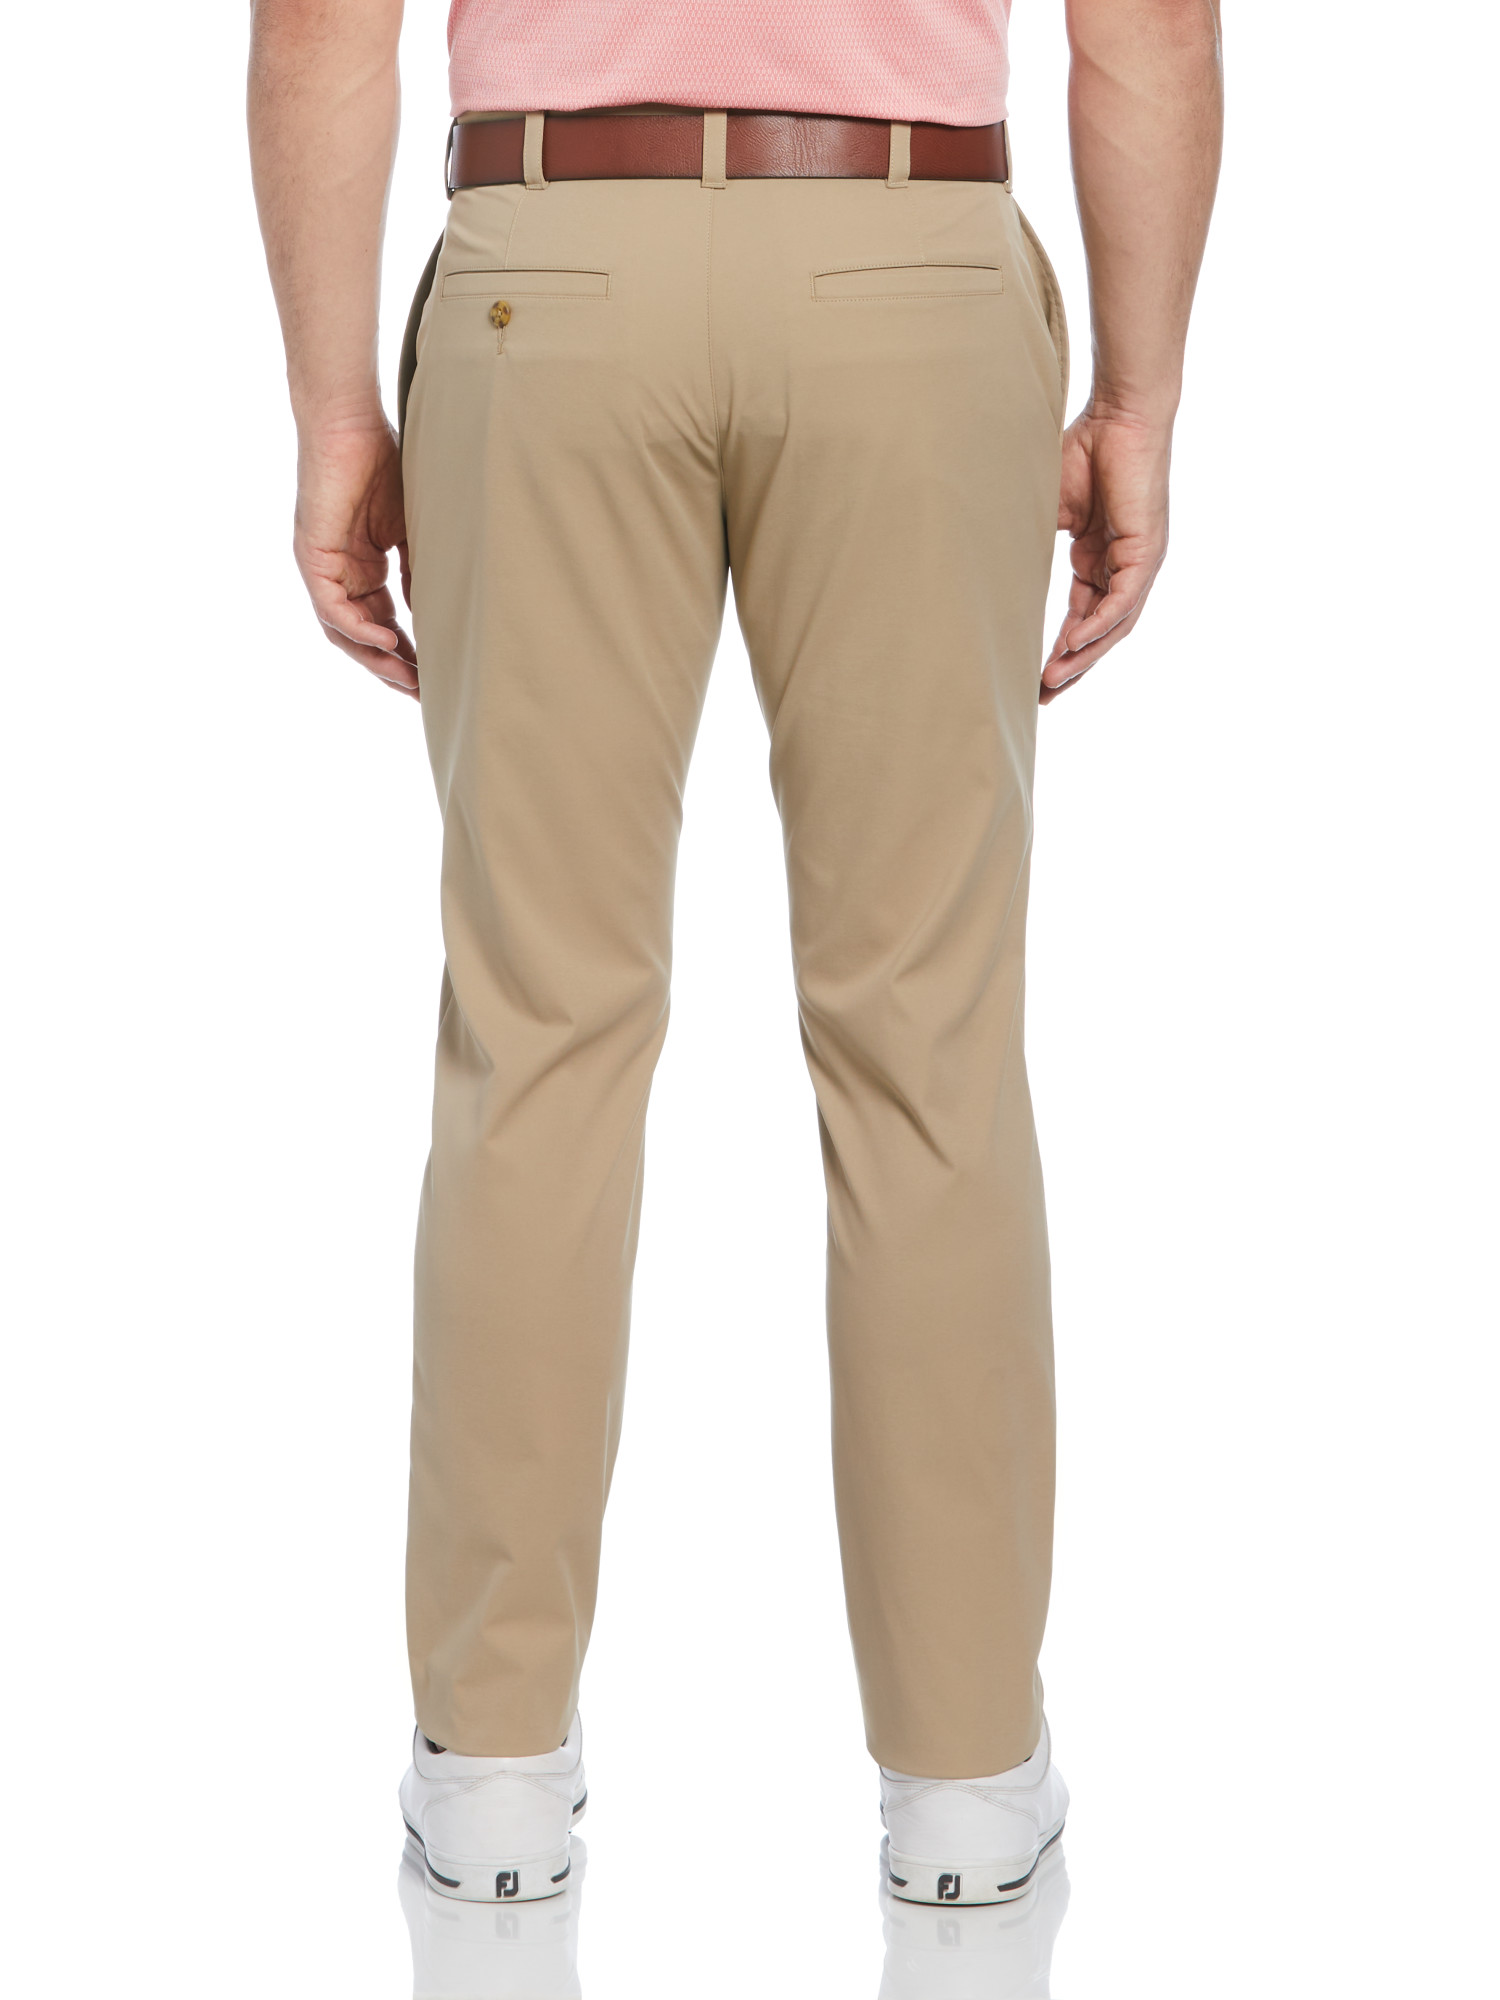 Ben Hogan Men's Flex 4-Way Stretch Golf Pants with Active Waistband, Sizes 30-50 - image 2 of 4